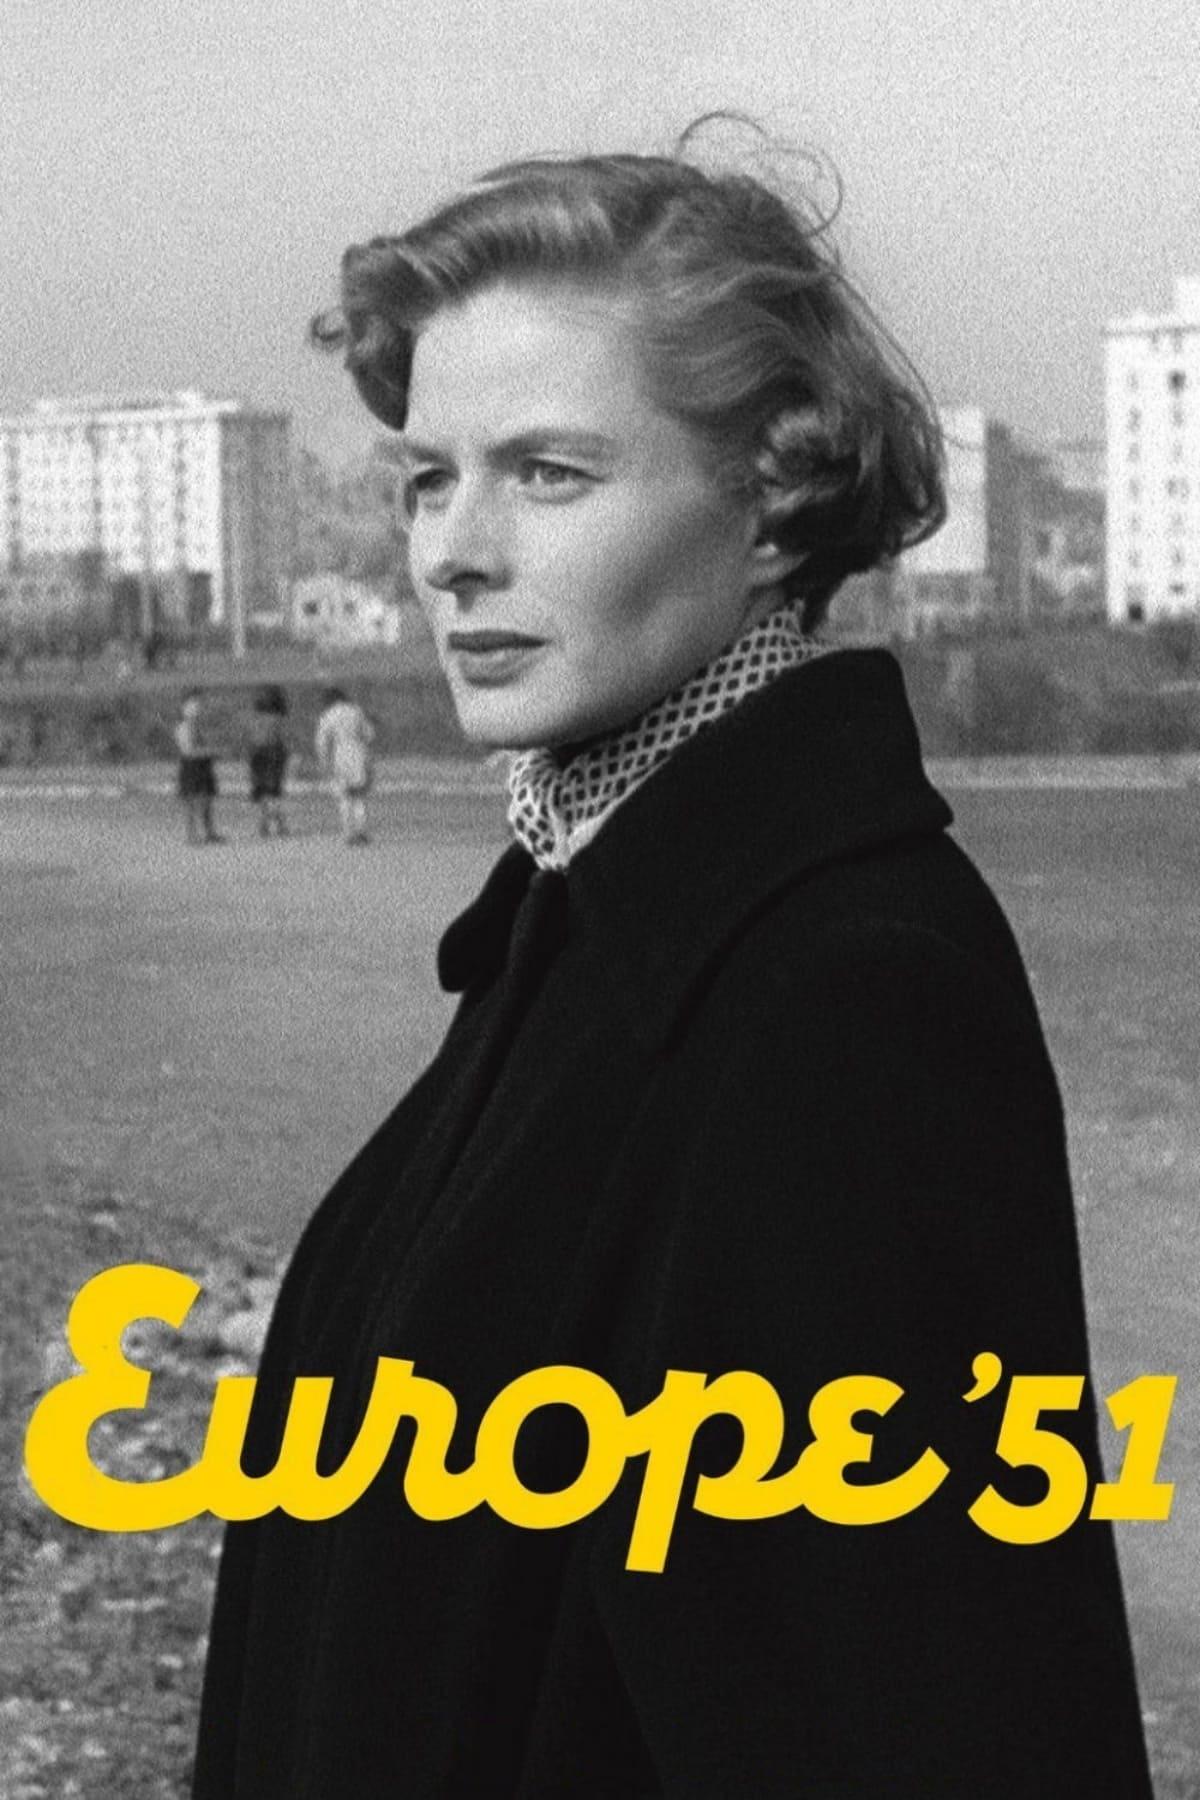 Europe '51 poster